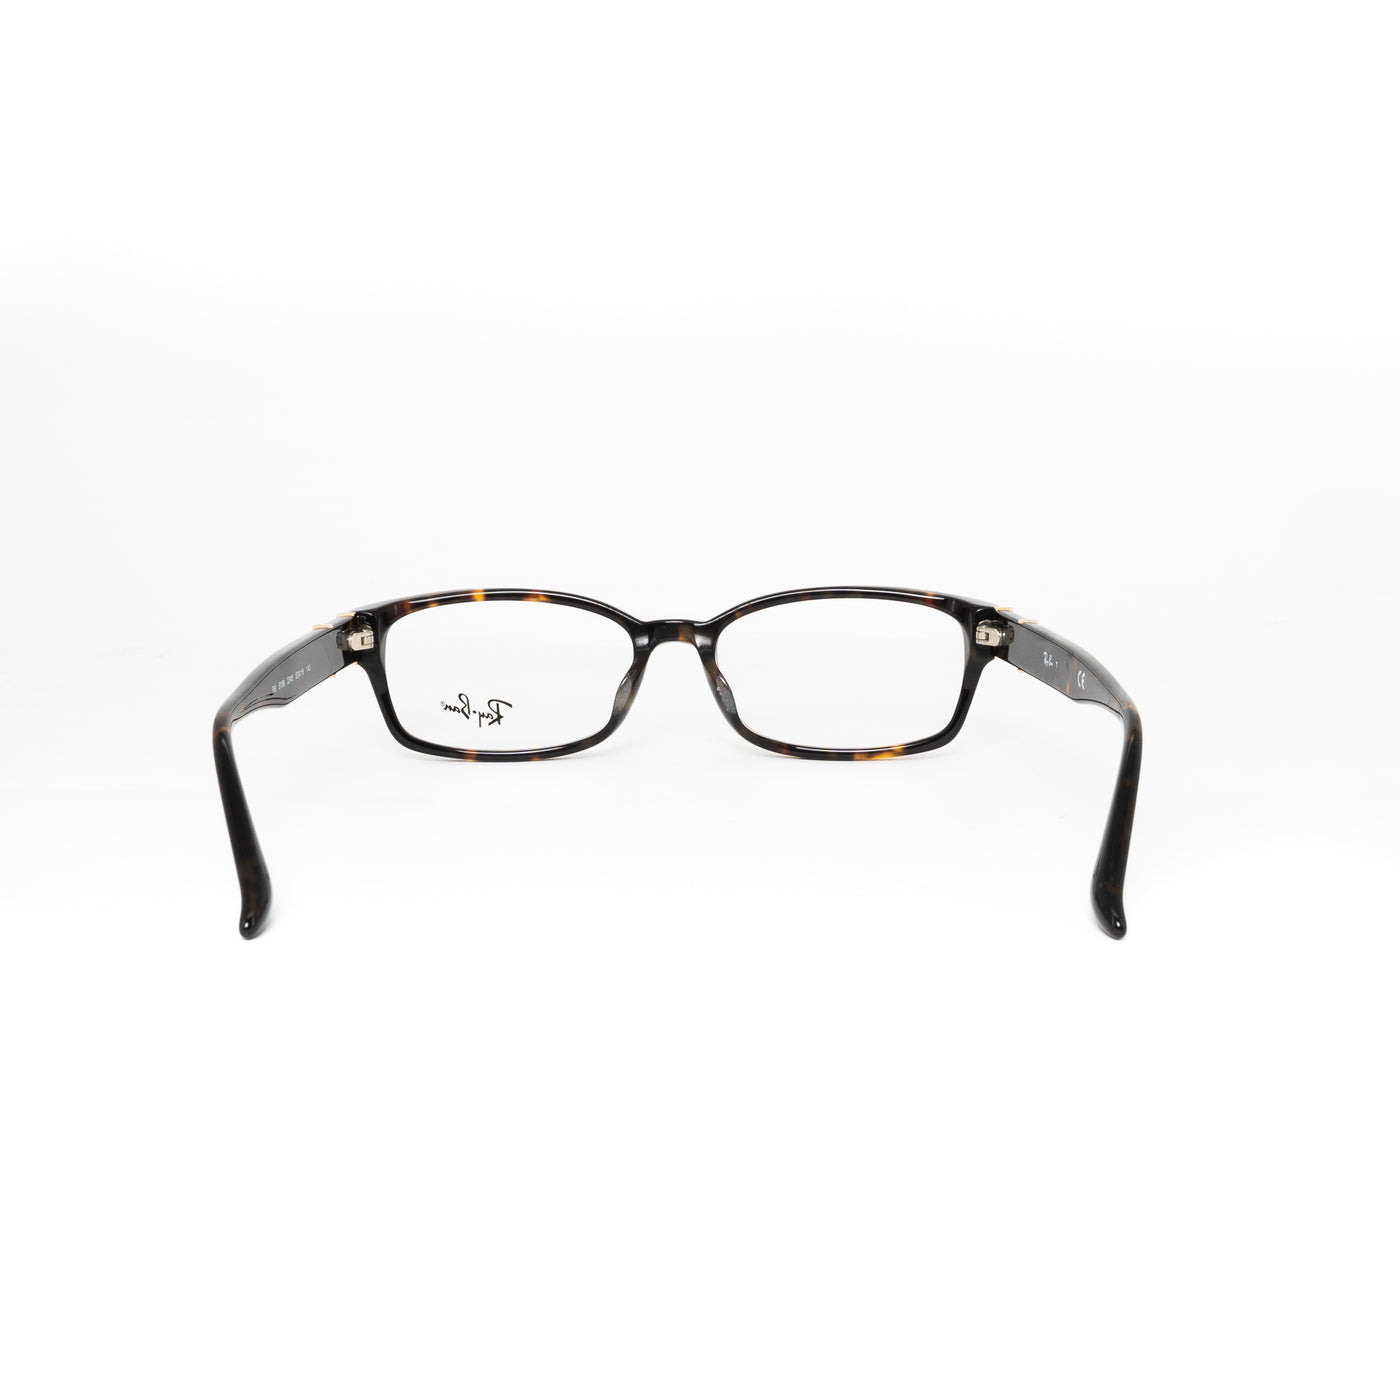 Ray-Ban RB5198234553 | Eyeglasses - Vision Express Optical Philippines